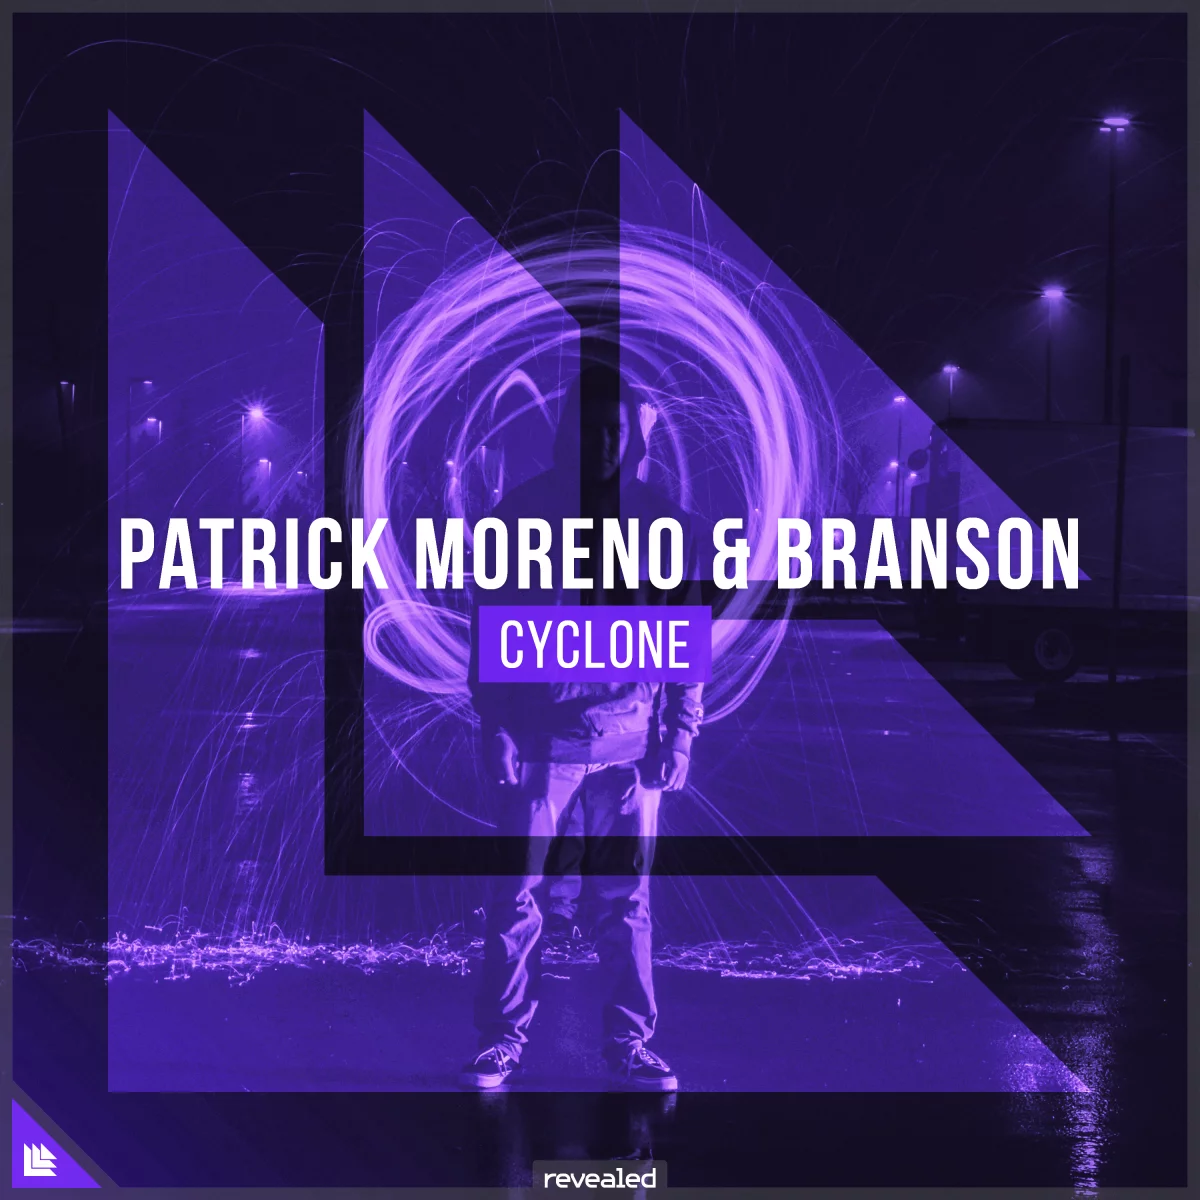 Cyclone - Patrick Moreno⁠ BRANSON⁠ 